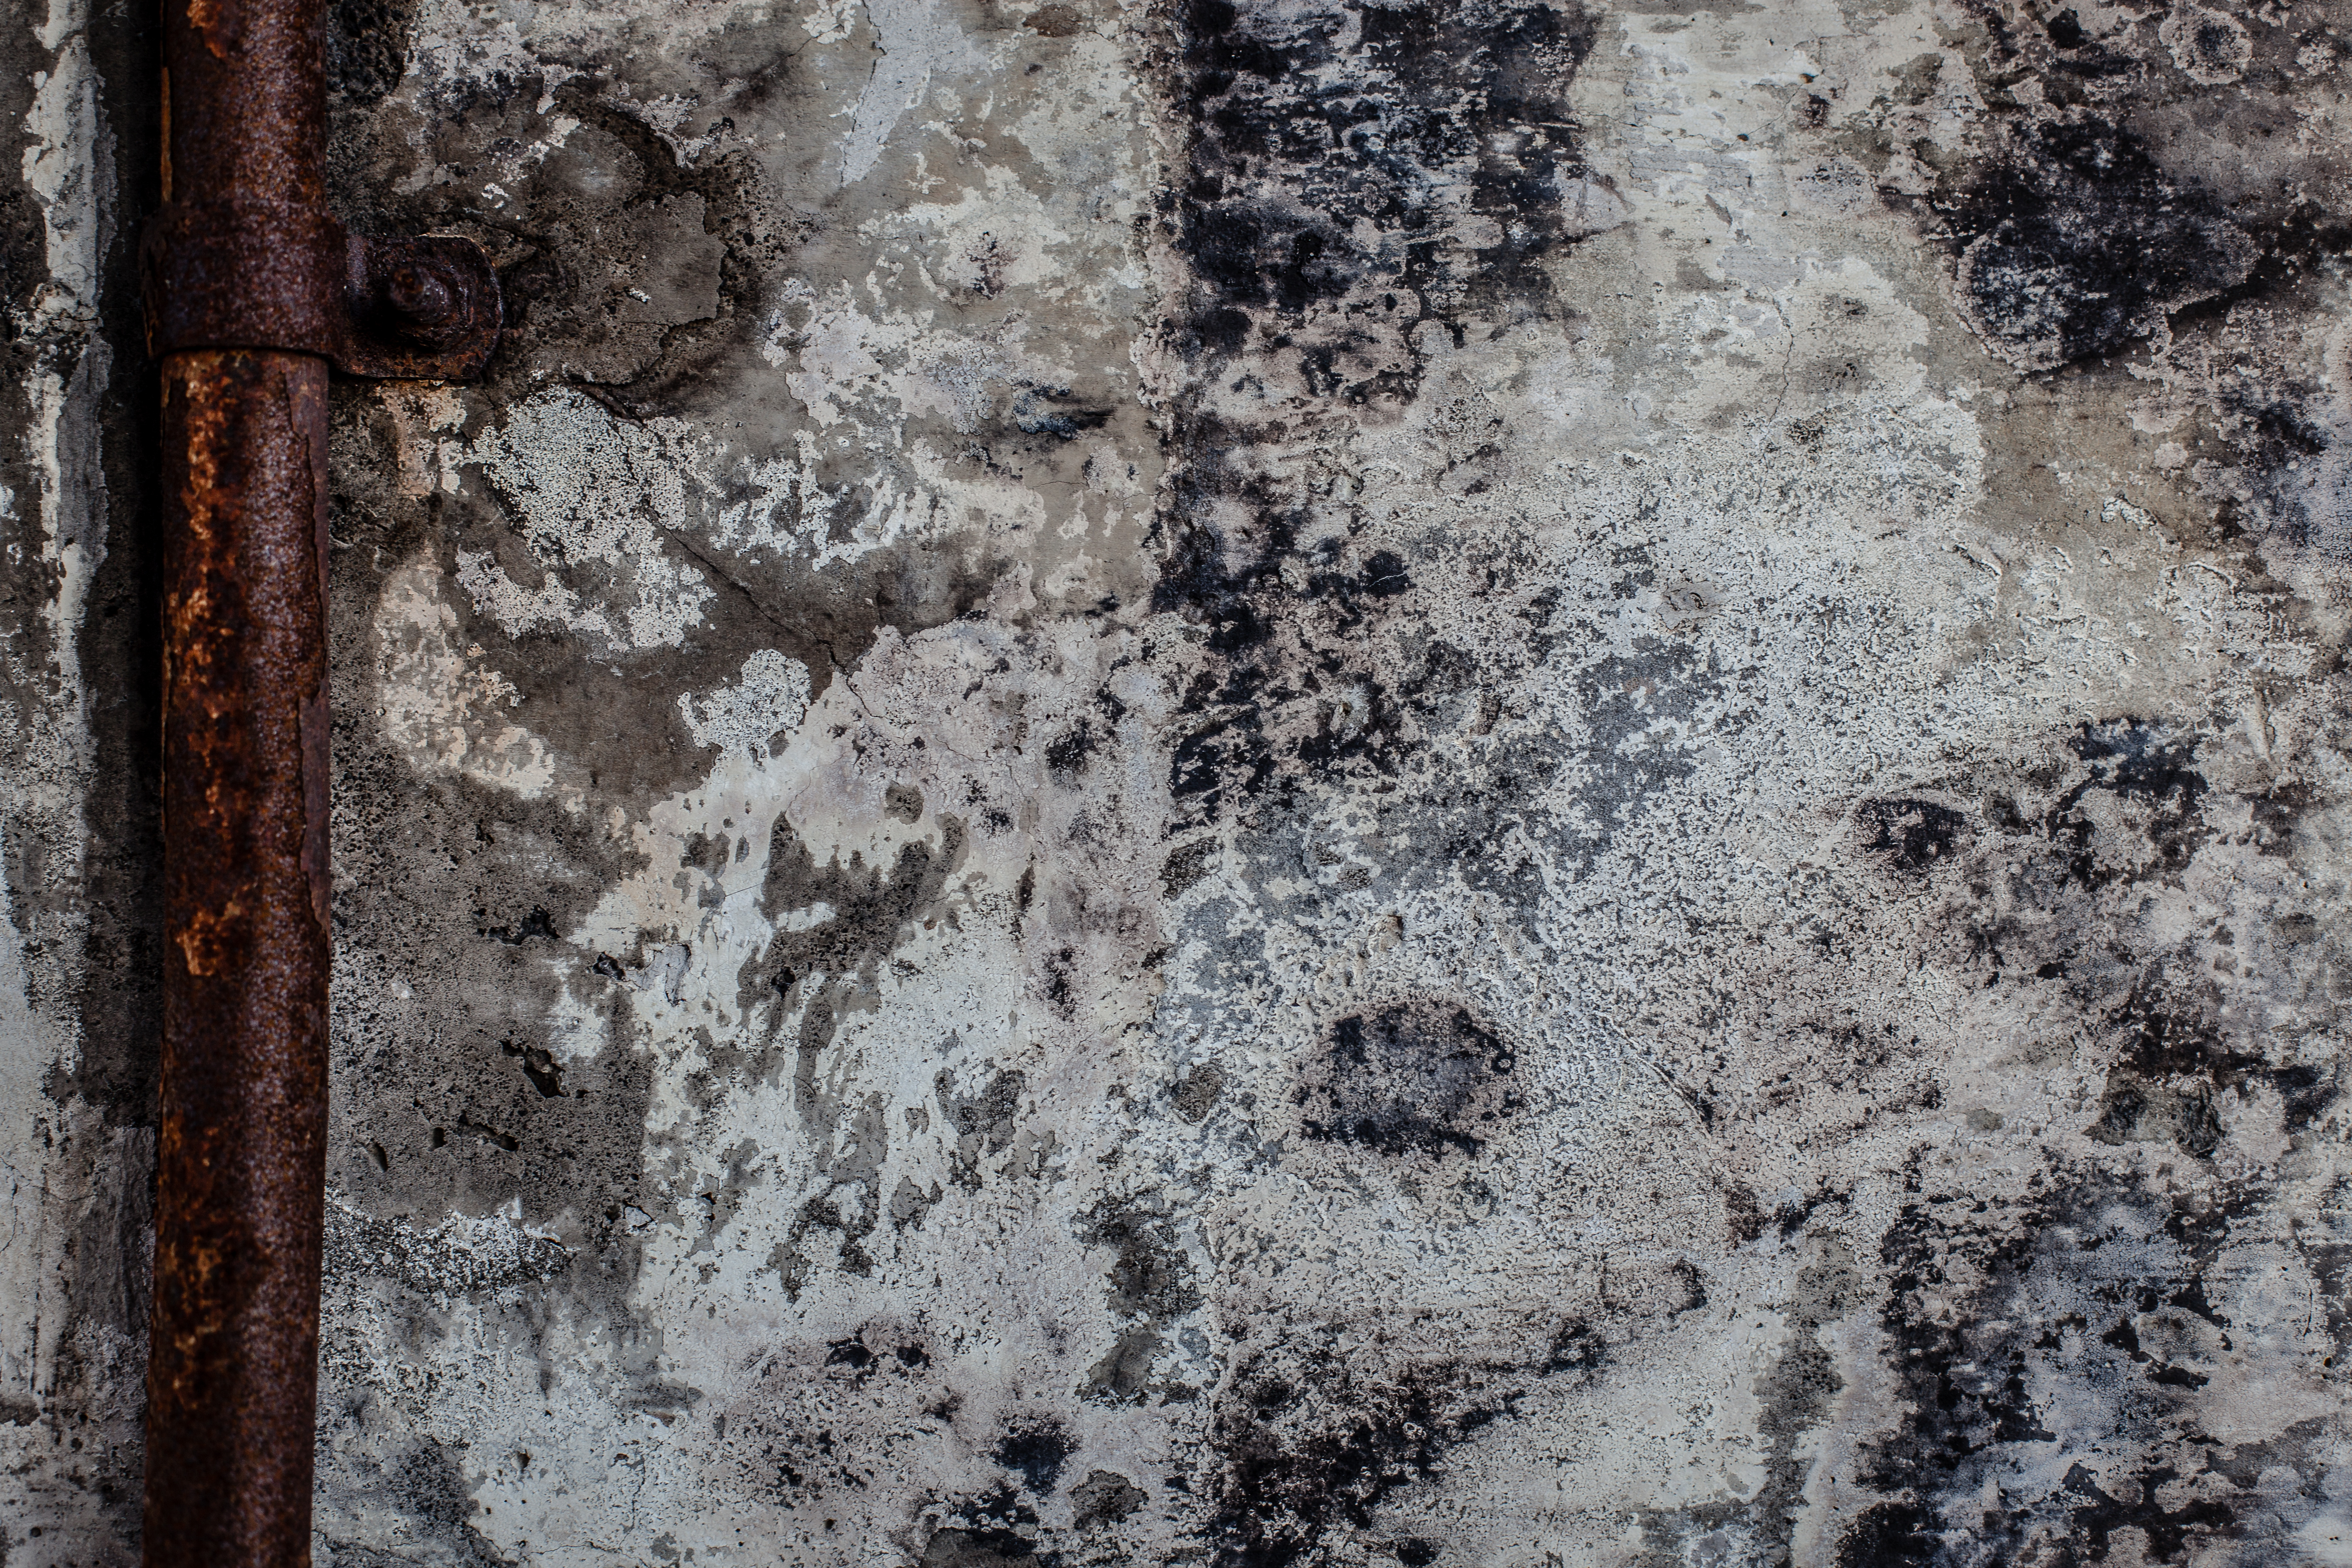 Moldy grunge wall surface photo